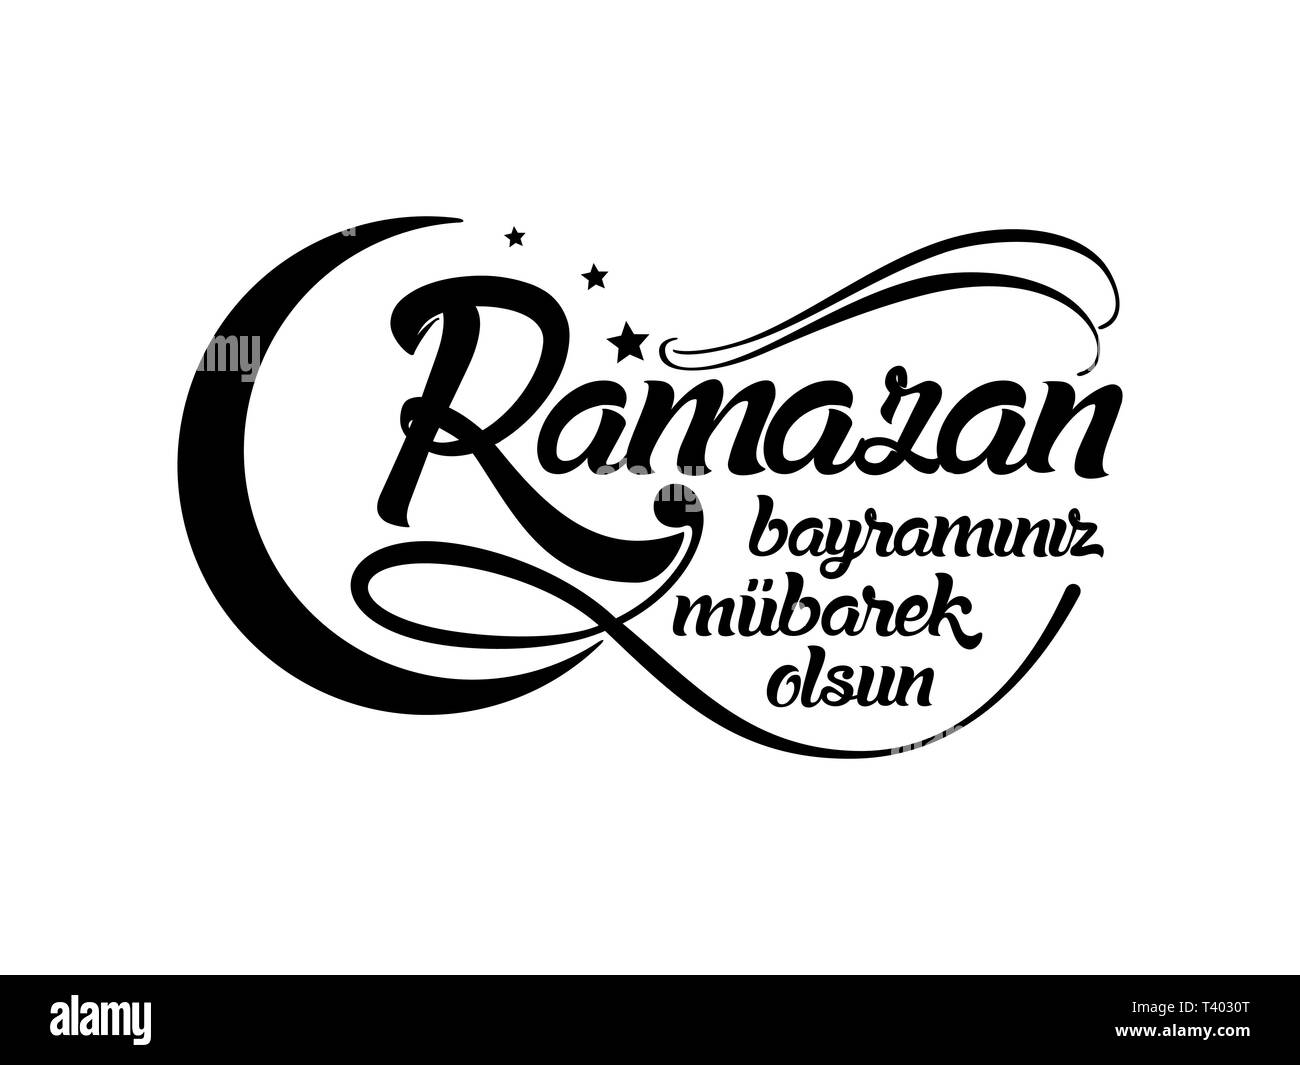 Ramazan bayraminiz mubarek olsun. Traduzione dal turco: Happy Ramadan. Illustrazione Vettoriale